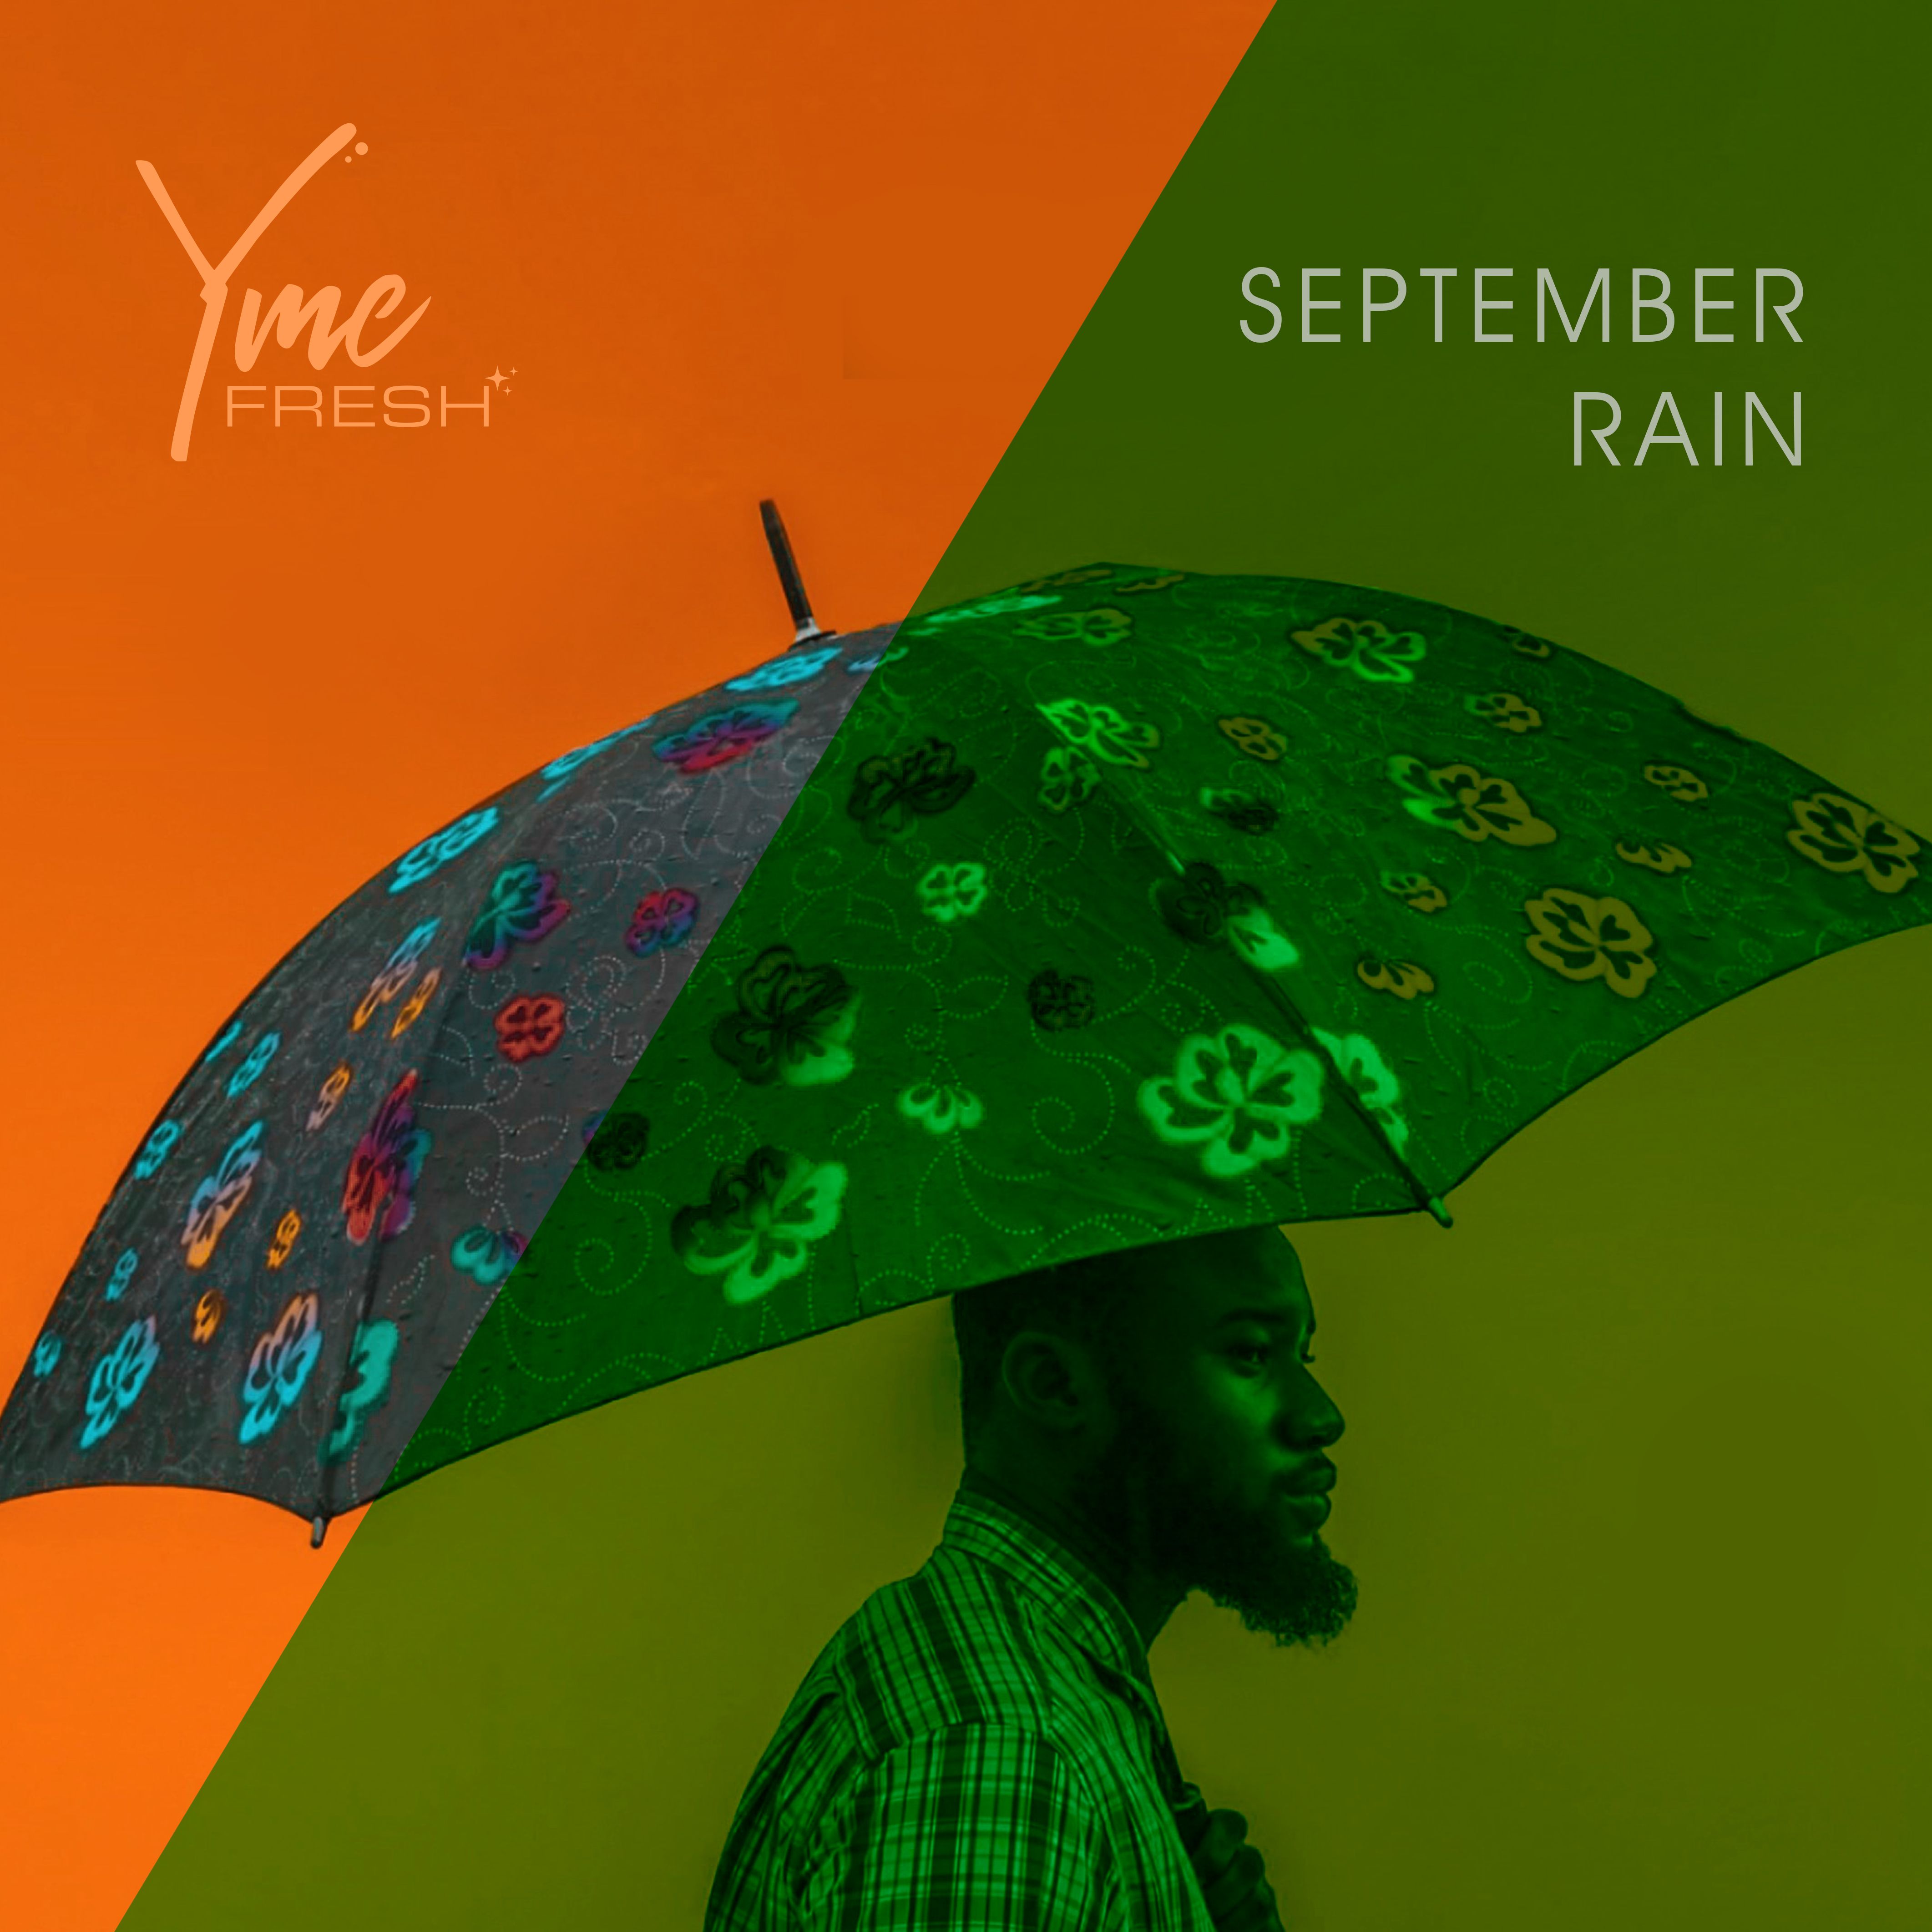 Télécharger [No Copyright Music] "September Rain" Chill Lofi Hip Hop (Copyright Free) Chillhop for Youtube